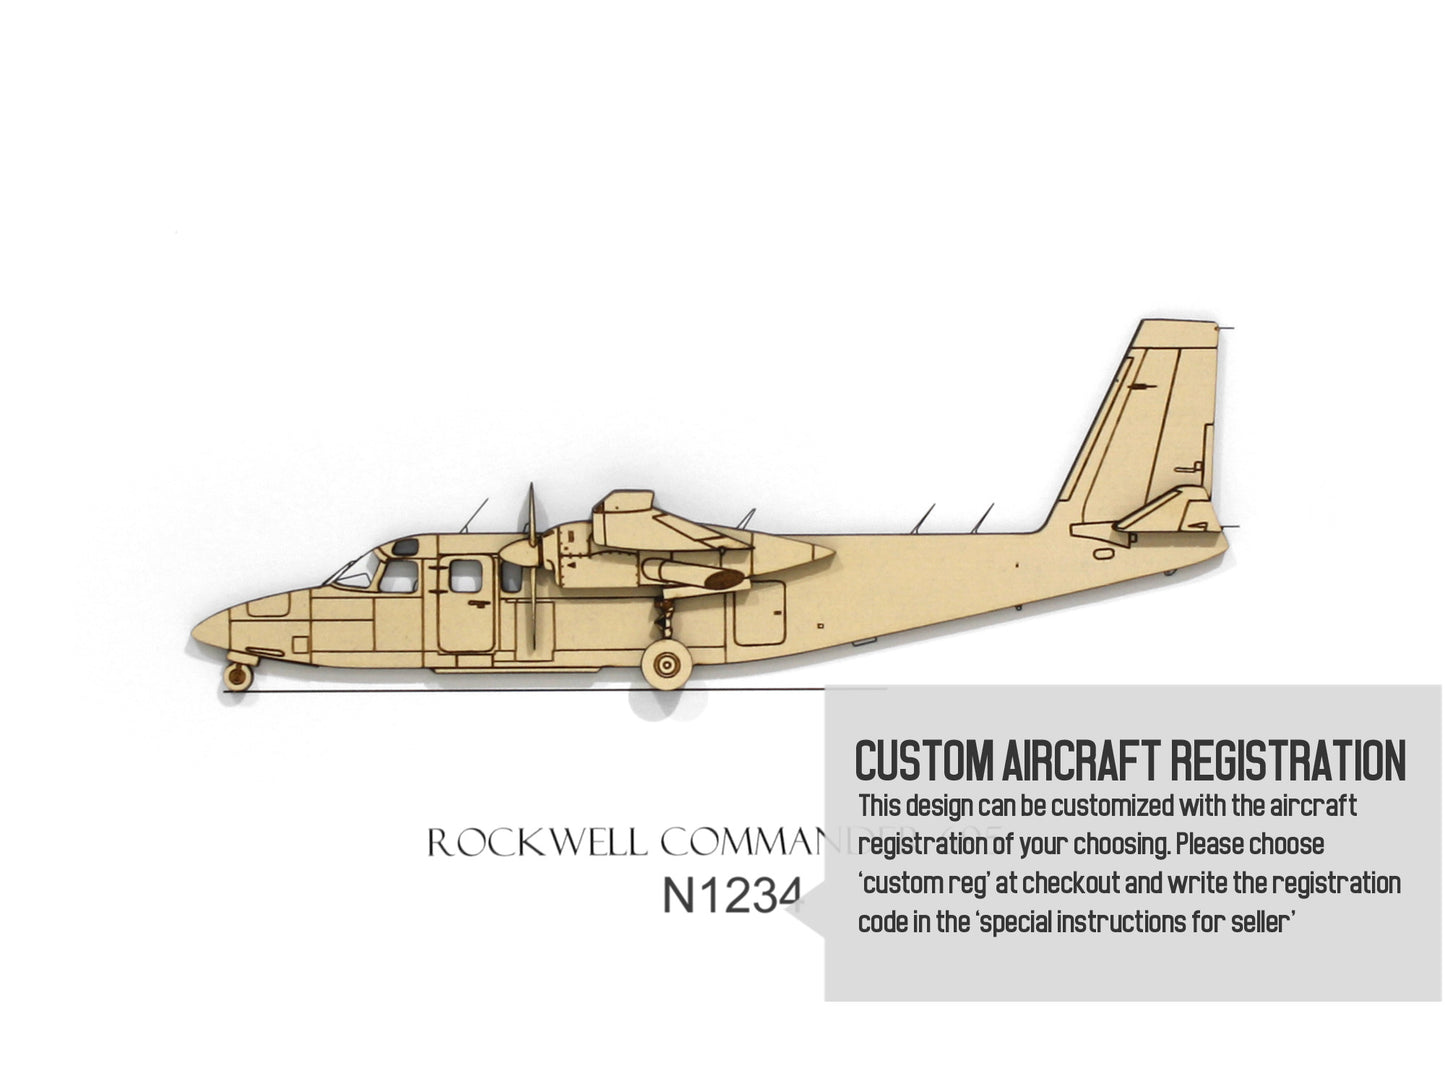 Rockwell Commander 695 aviation gift